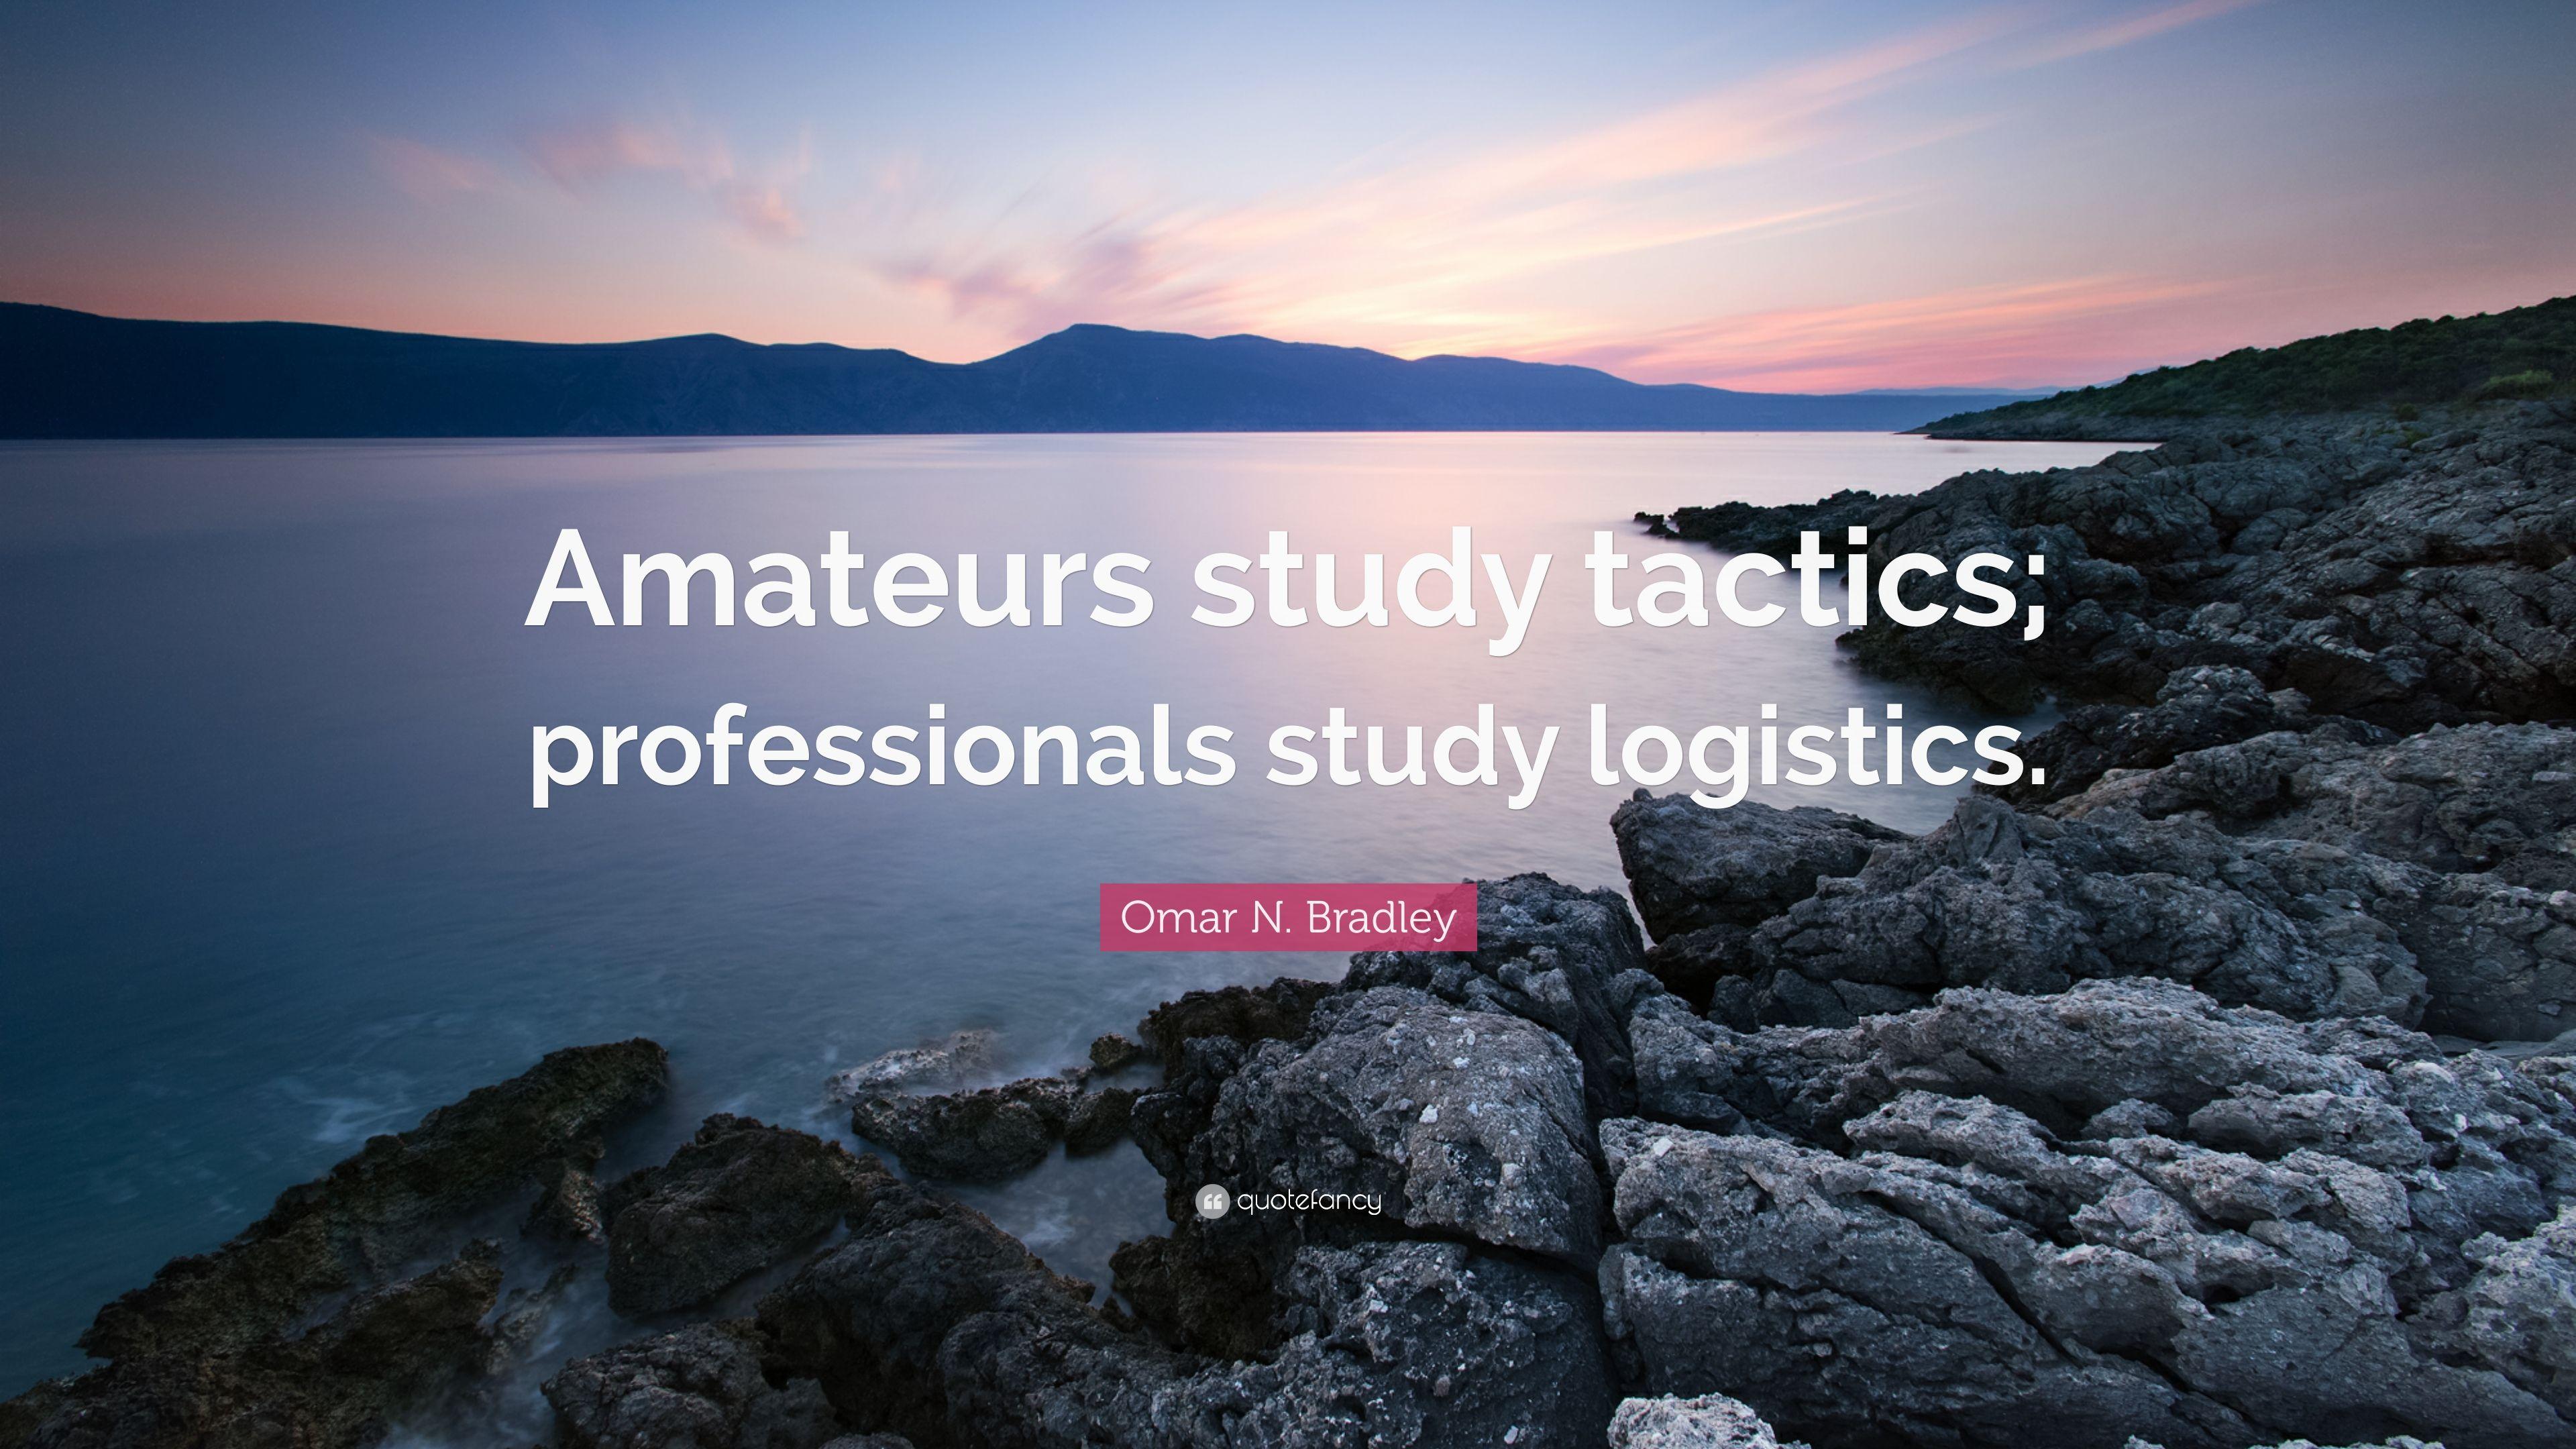 Omar N. Bradley Quote: “Amateurs study tactics; professionals study